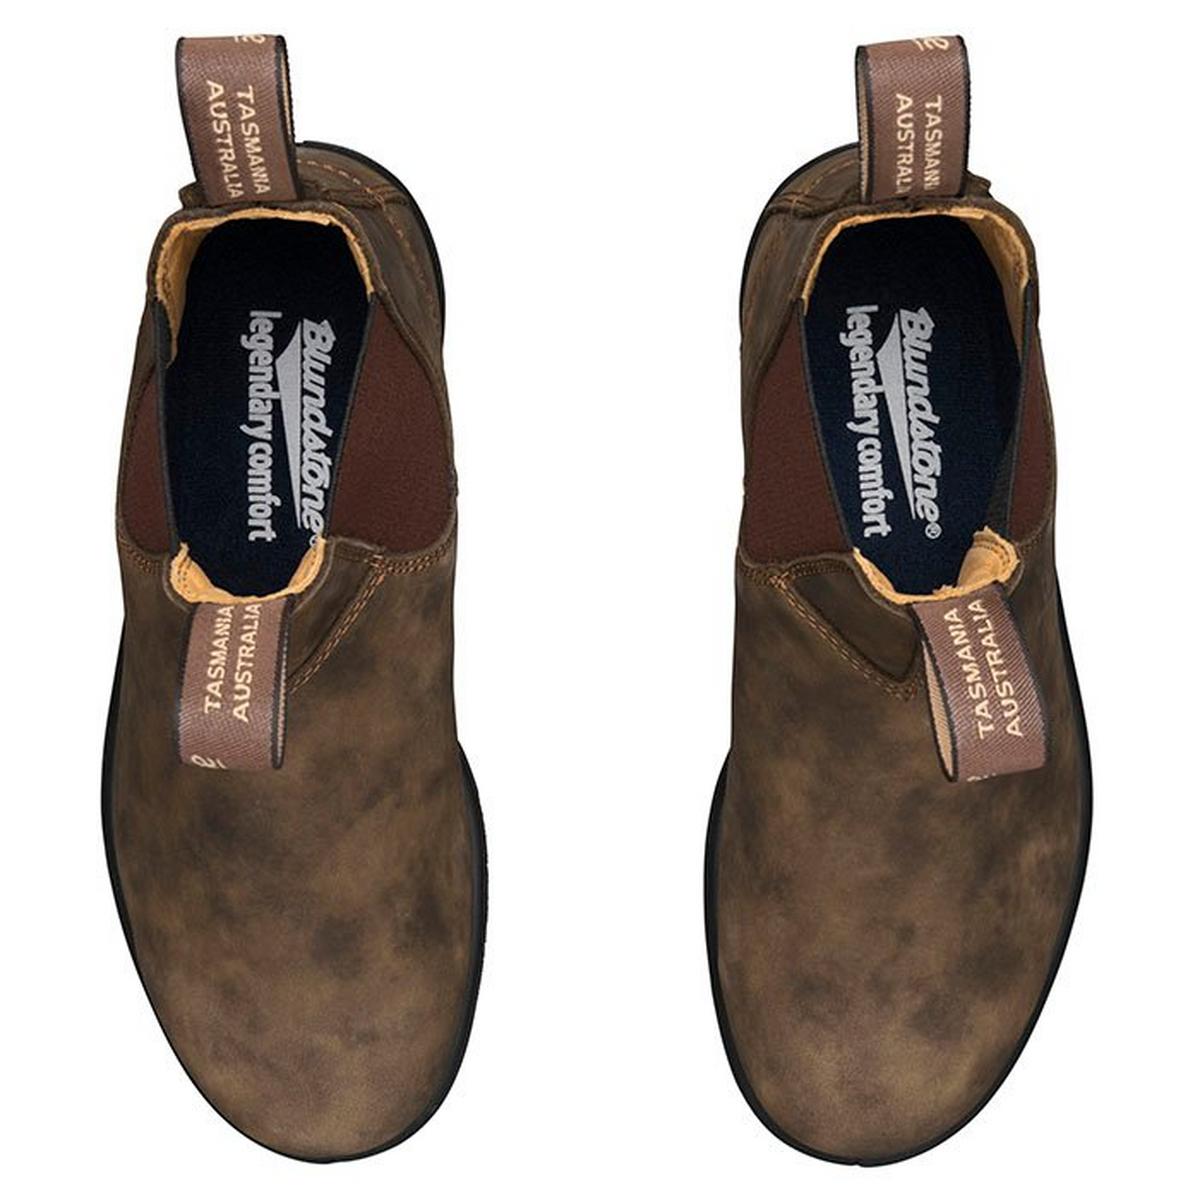 #585 Classic Boot in Rustic Brown